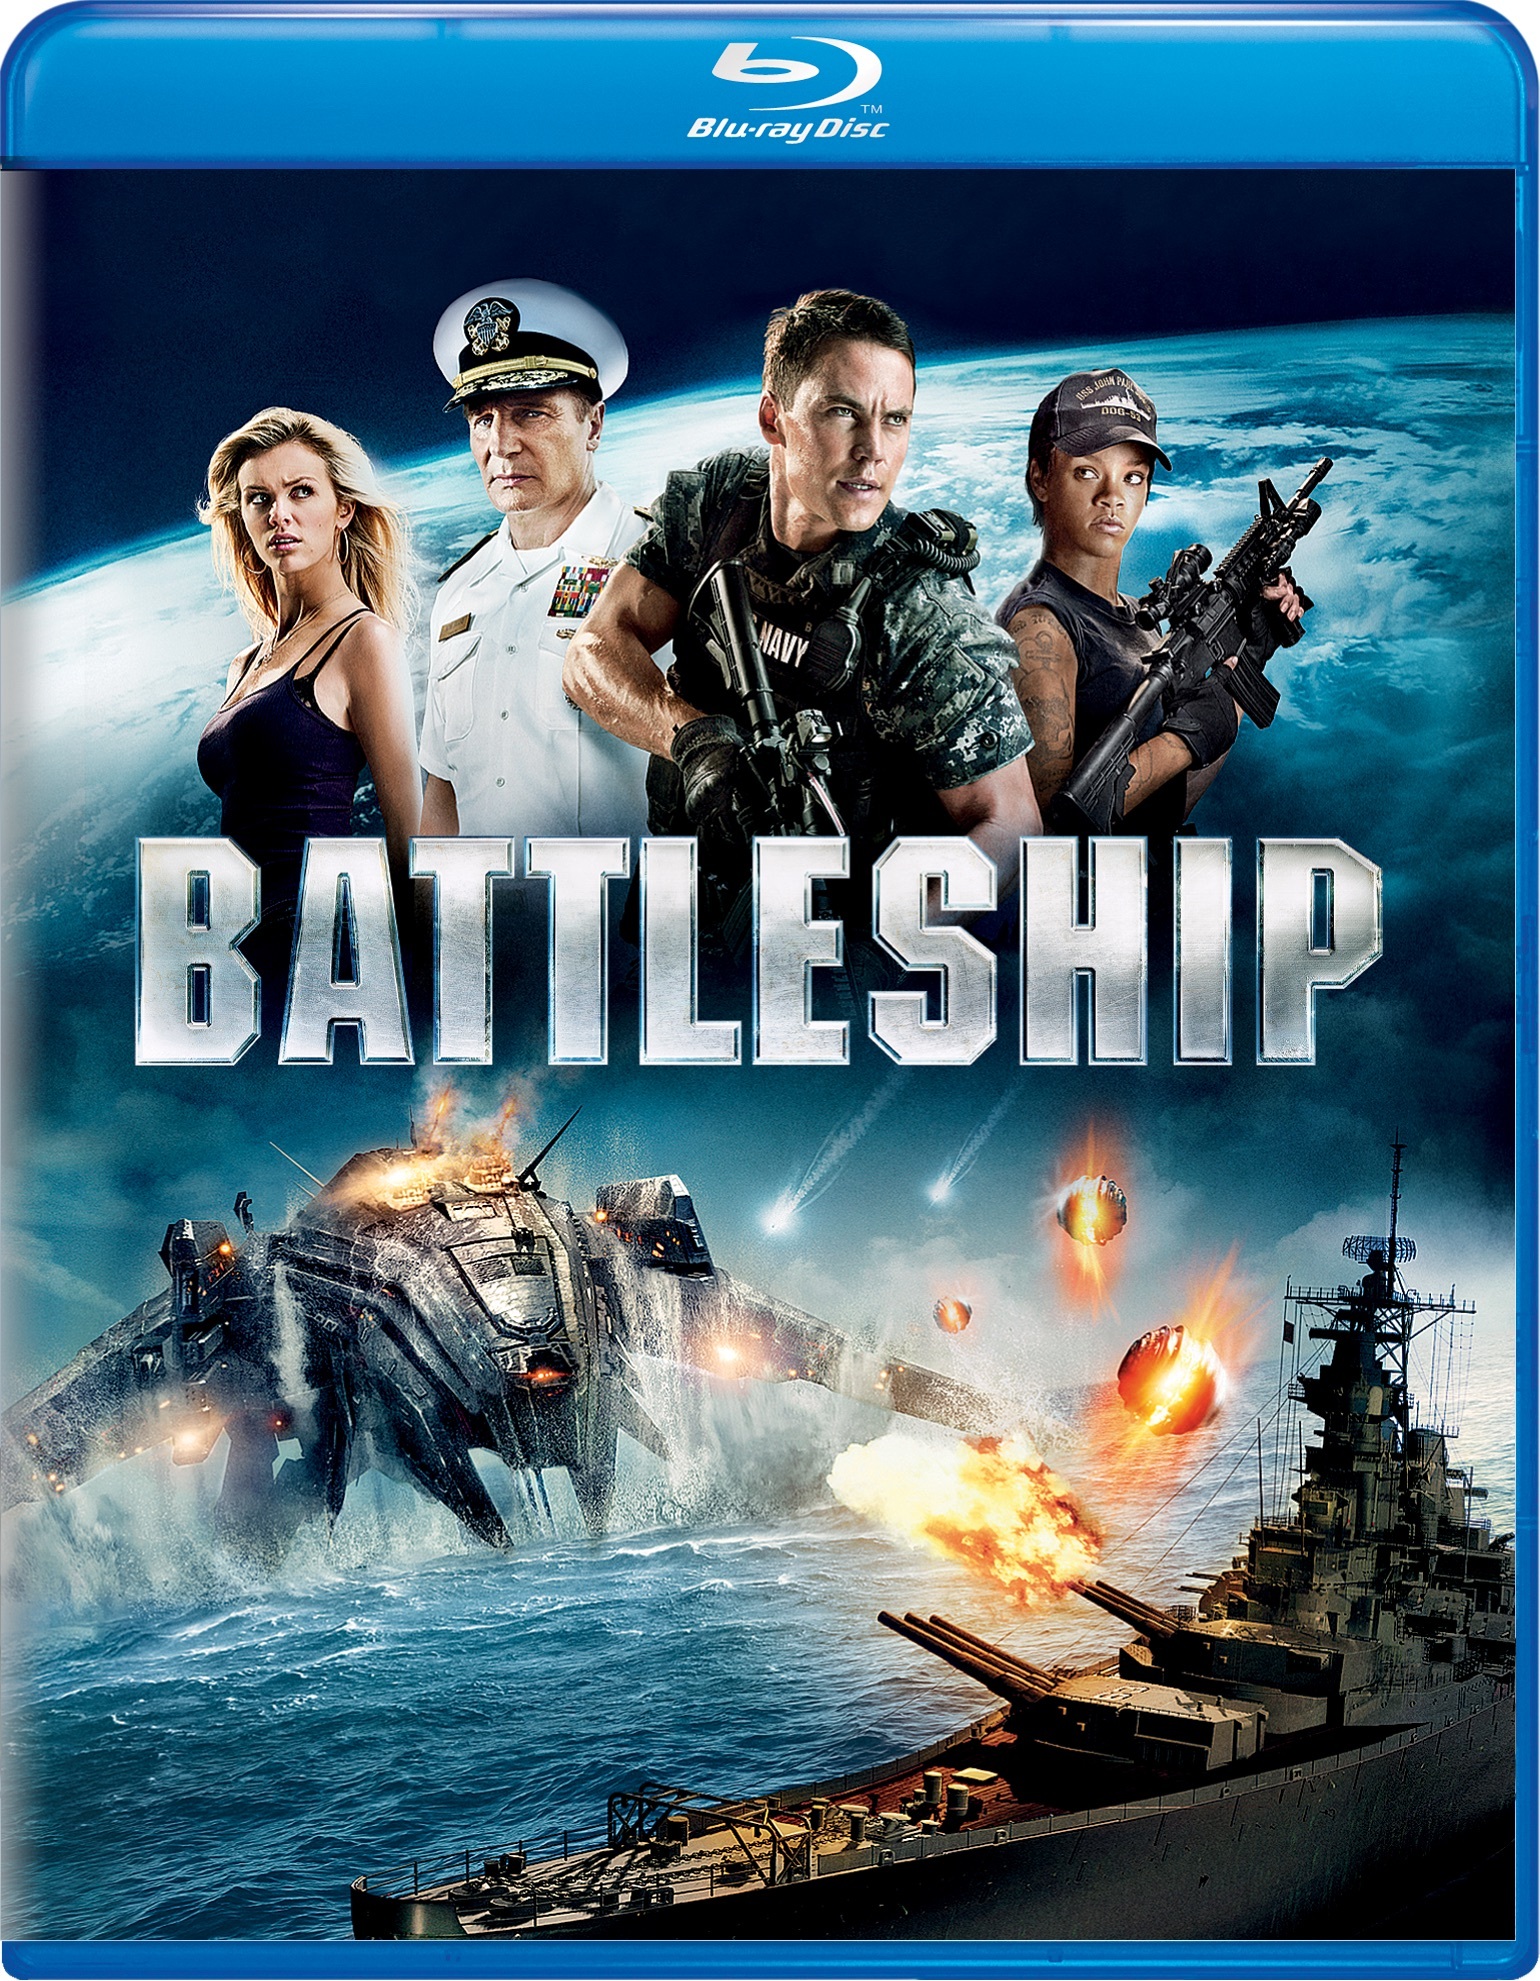 Battleship (Blu-ray New Box Art) - Blu-ray [ 2012 ]  - Sci Fi Movies On Blu-ray - Movies On GRUV